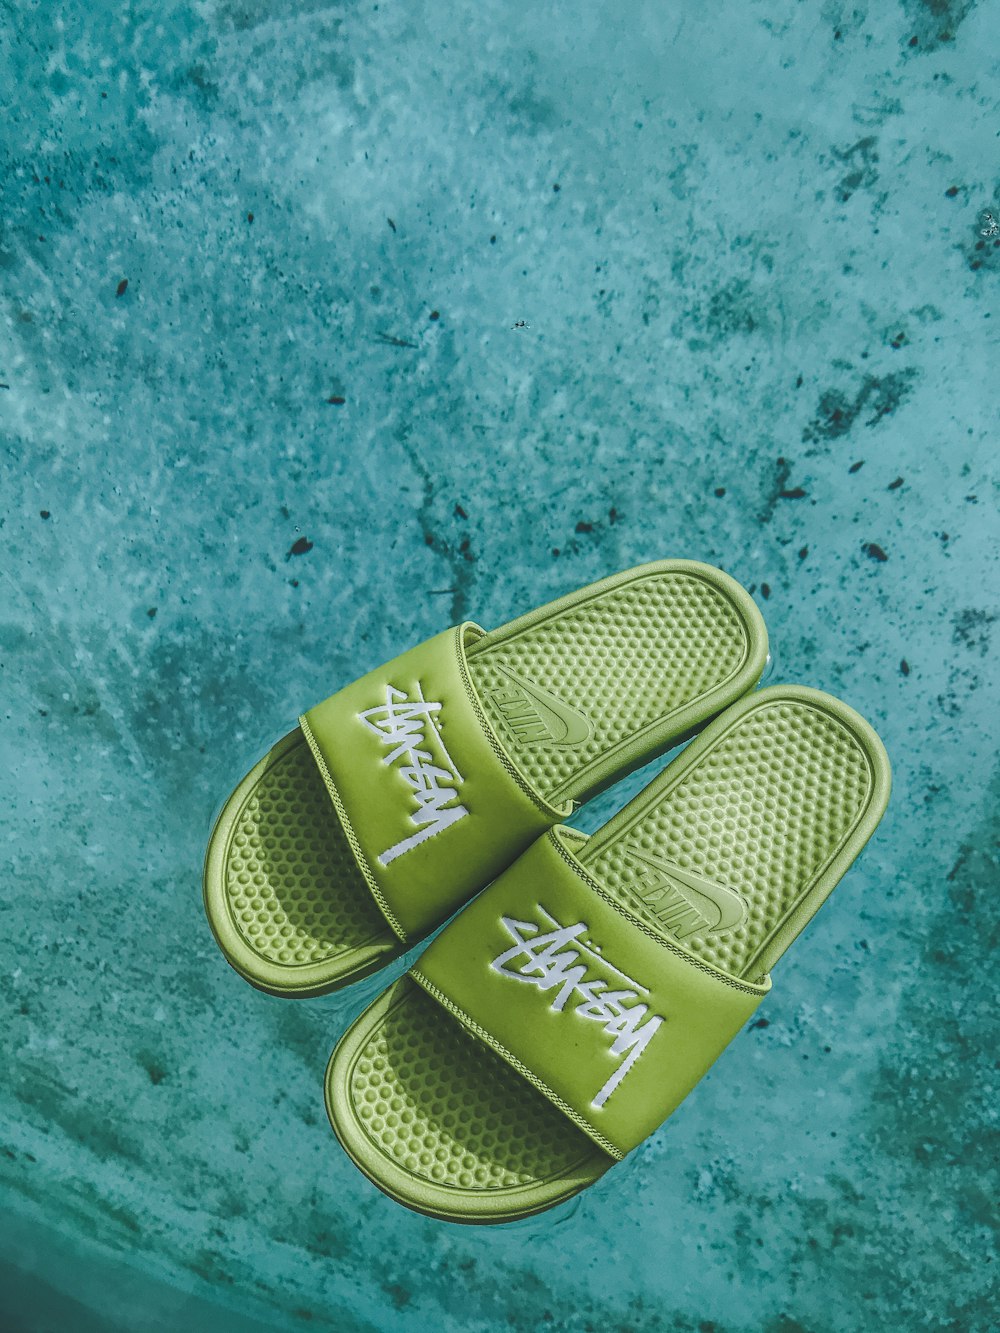 Grabar Nuestra compañía Año nuevo black and yellow nike slide sandals photo – Free France Image on Unsplash